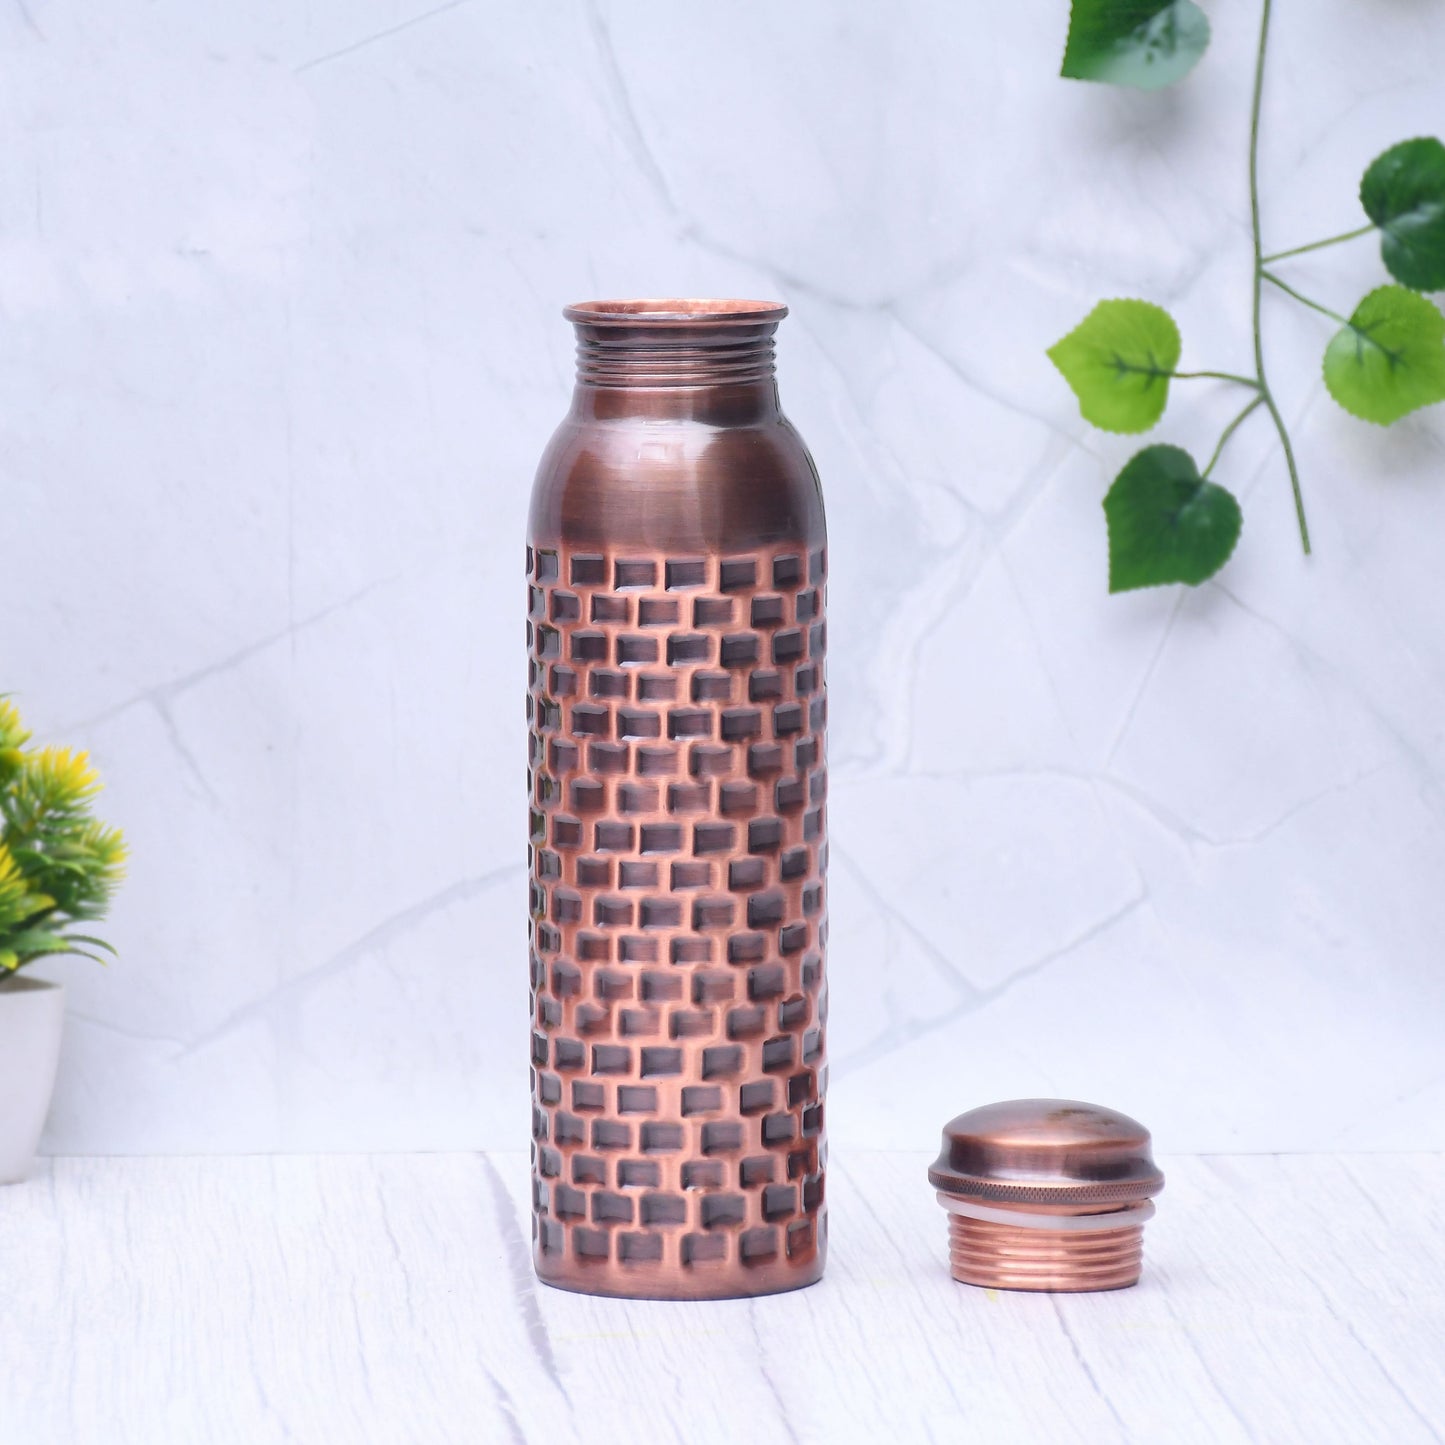 SAMA Homes - pure copper water bottle antique brick design